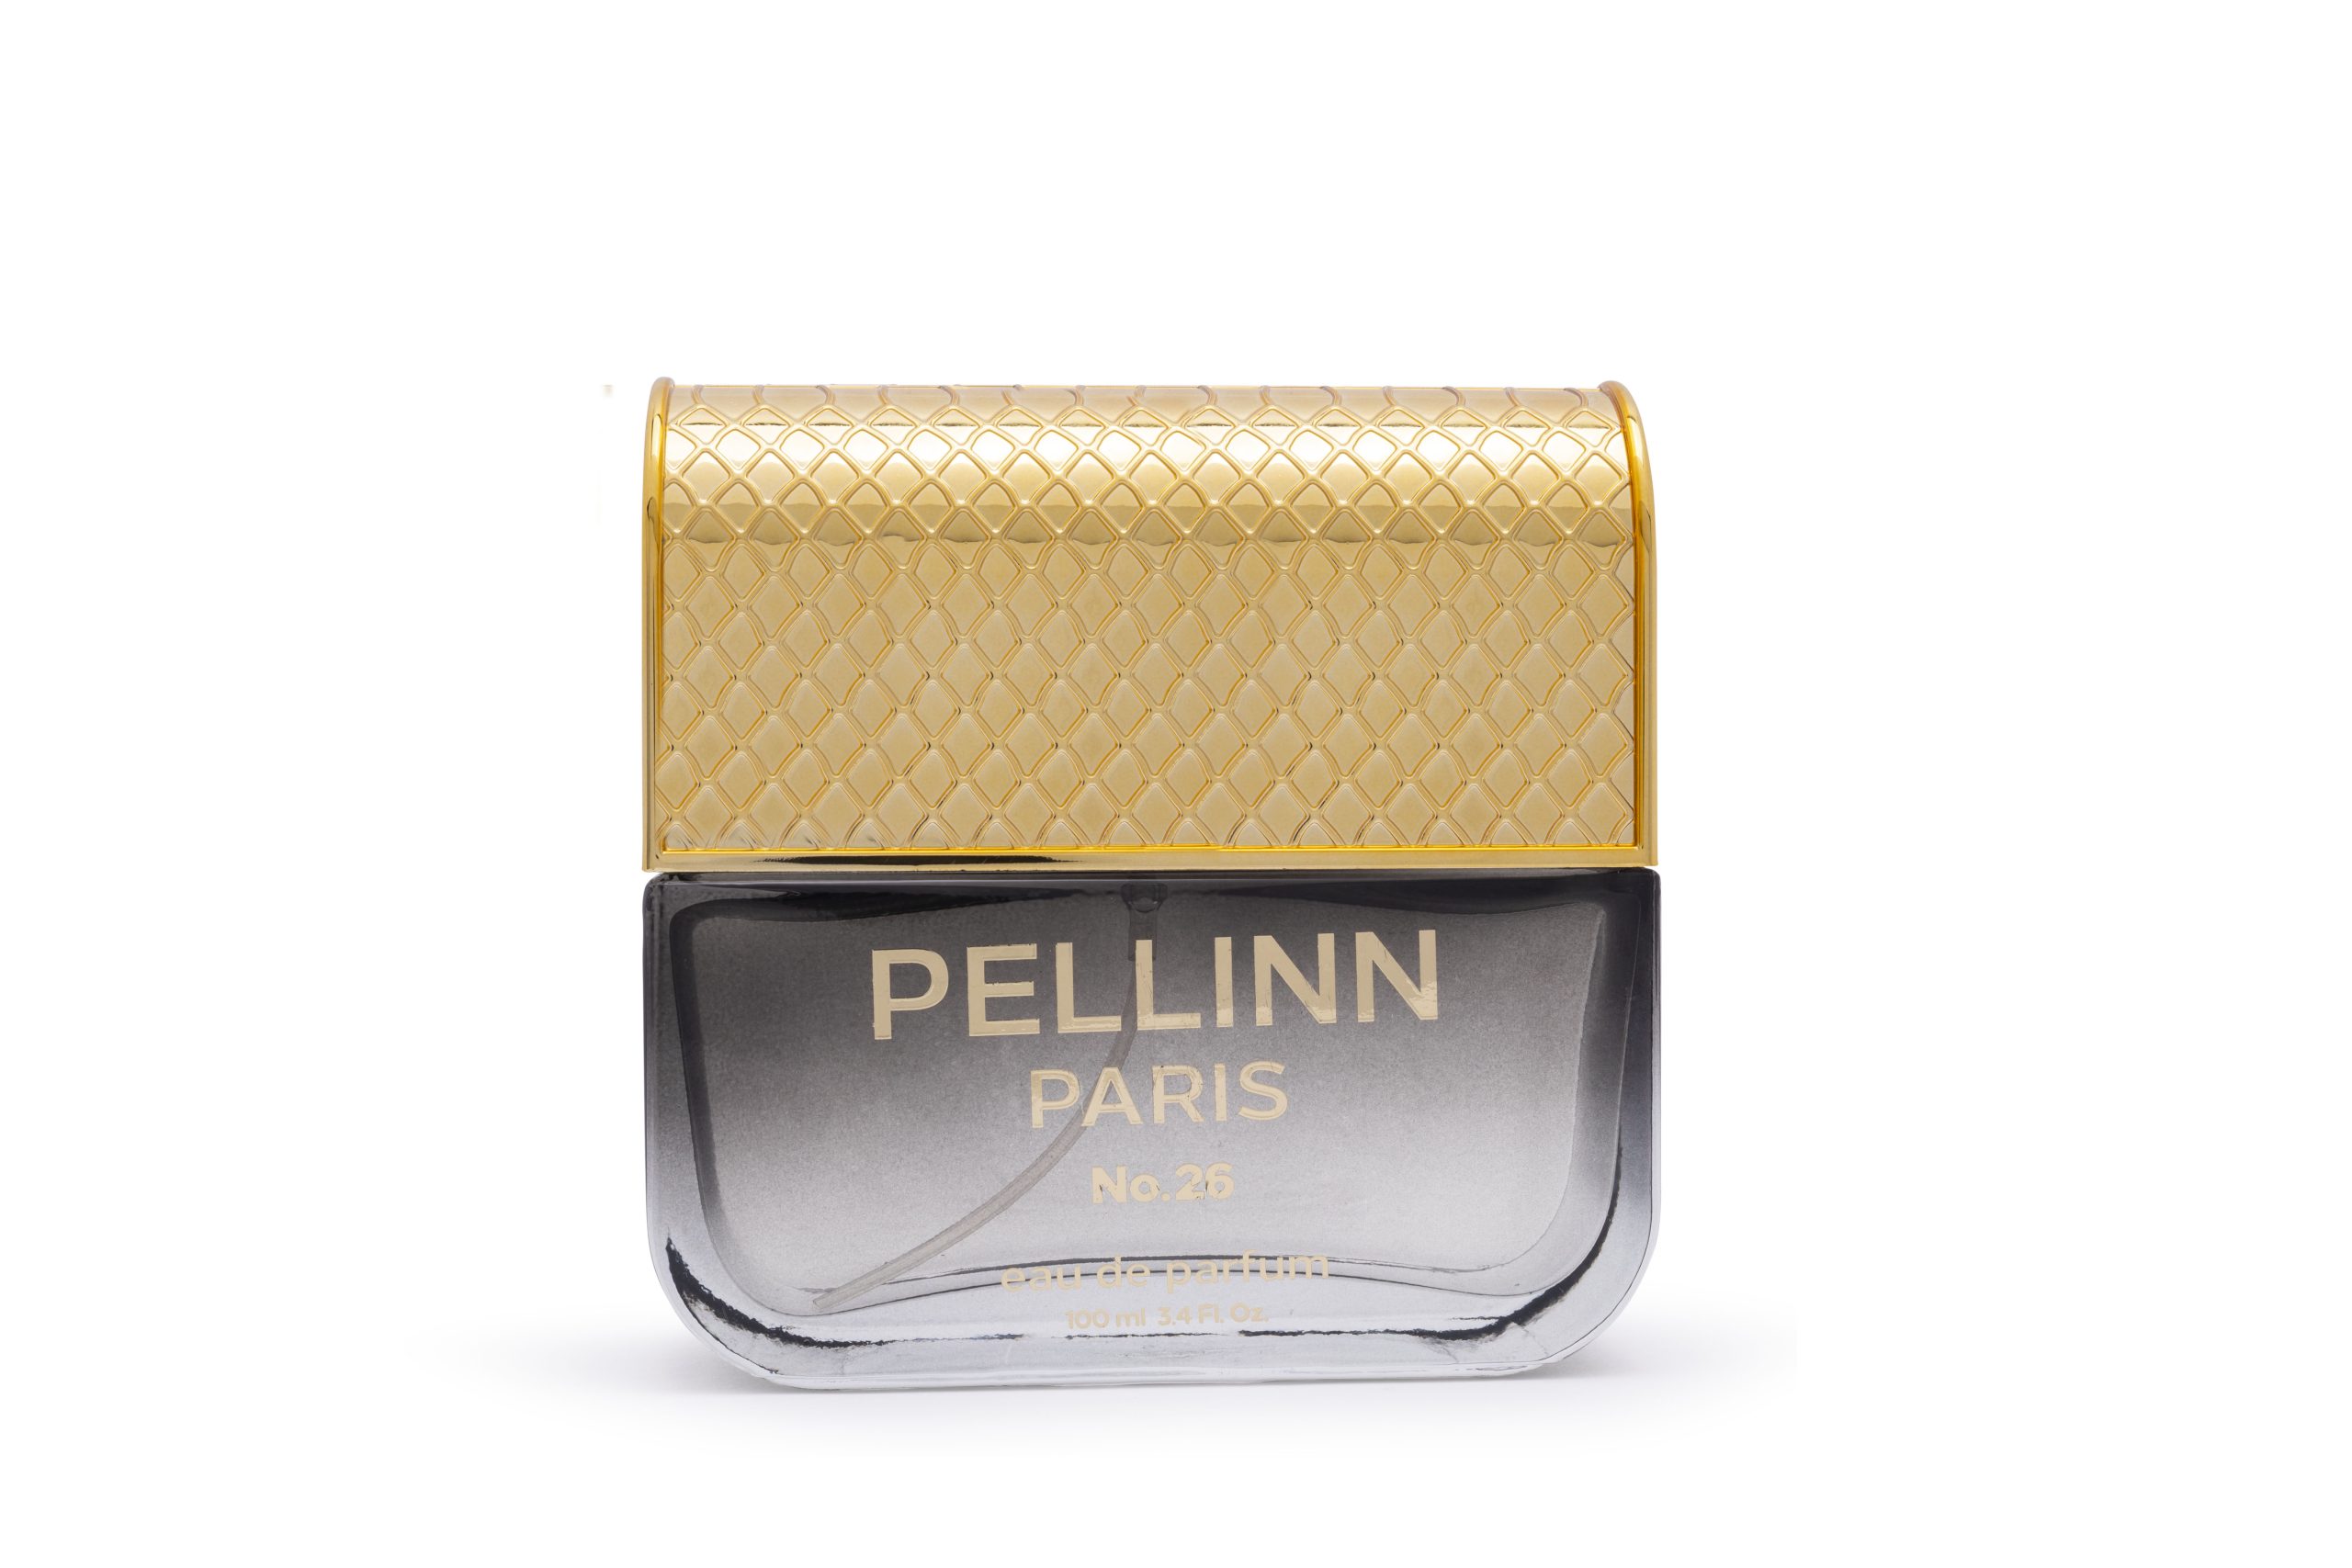 Pellinn Paris Parfum